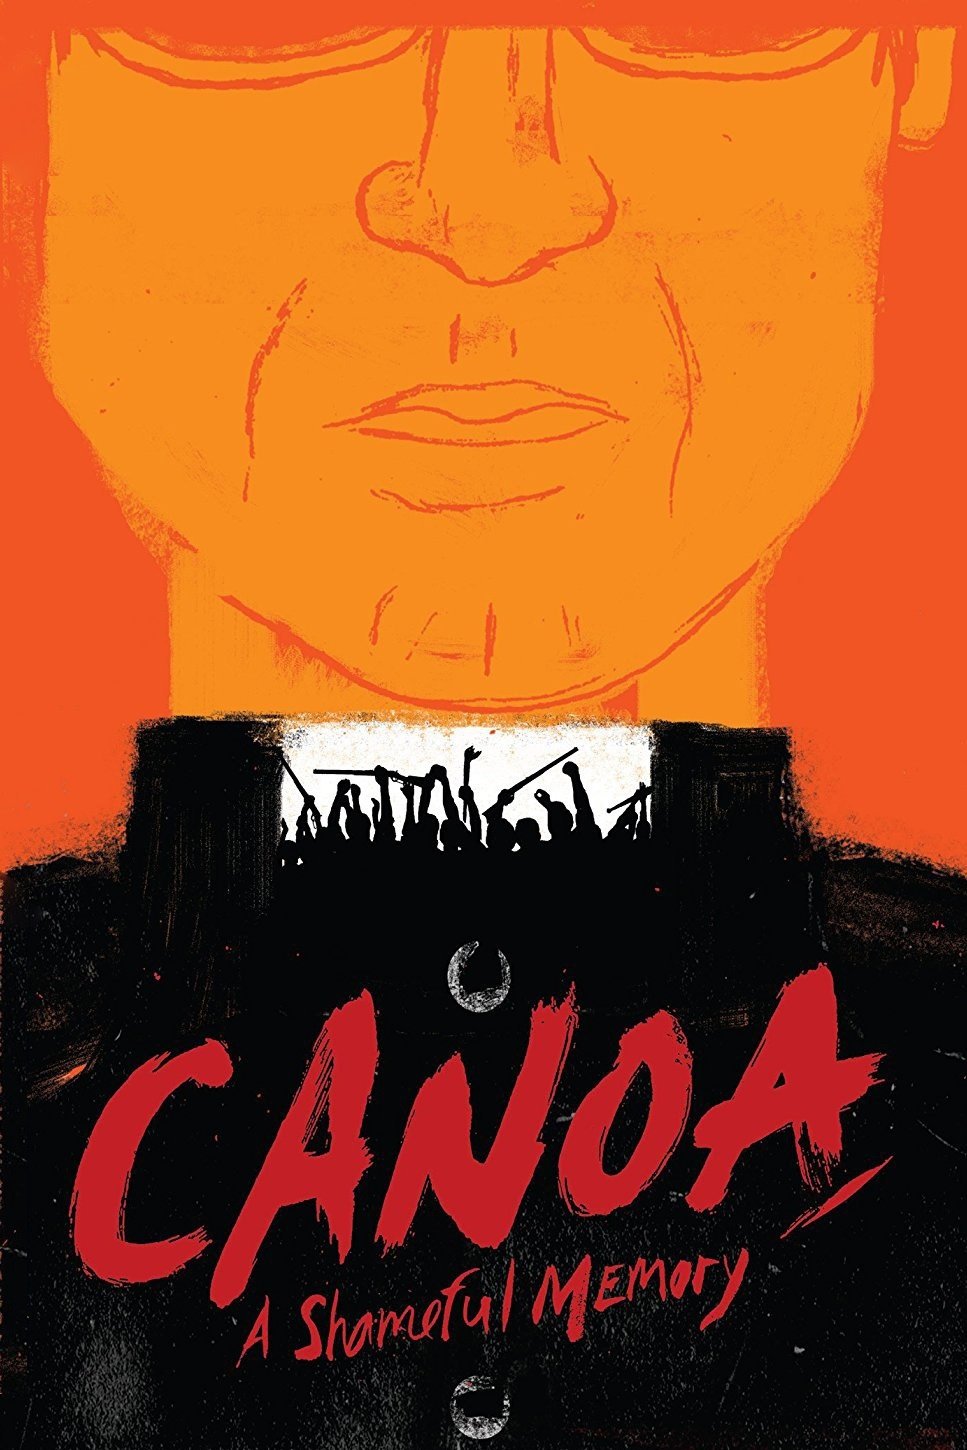 Canoa: A Shameful Memory Poster